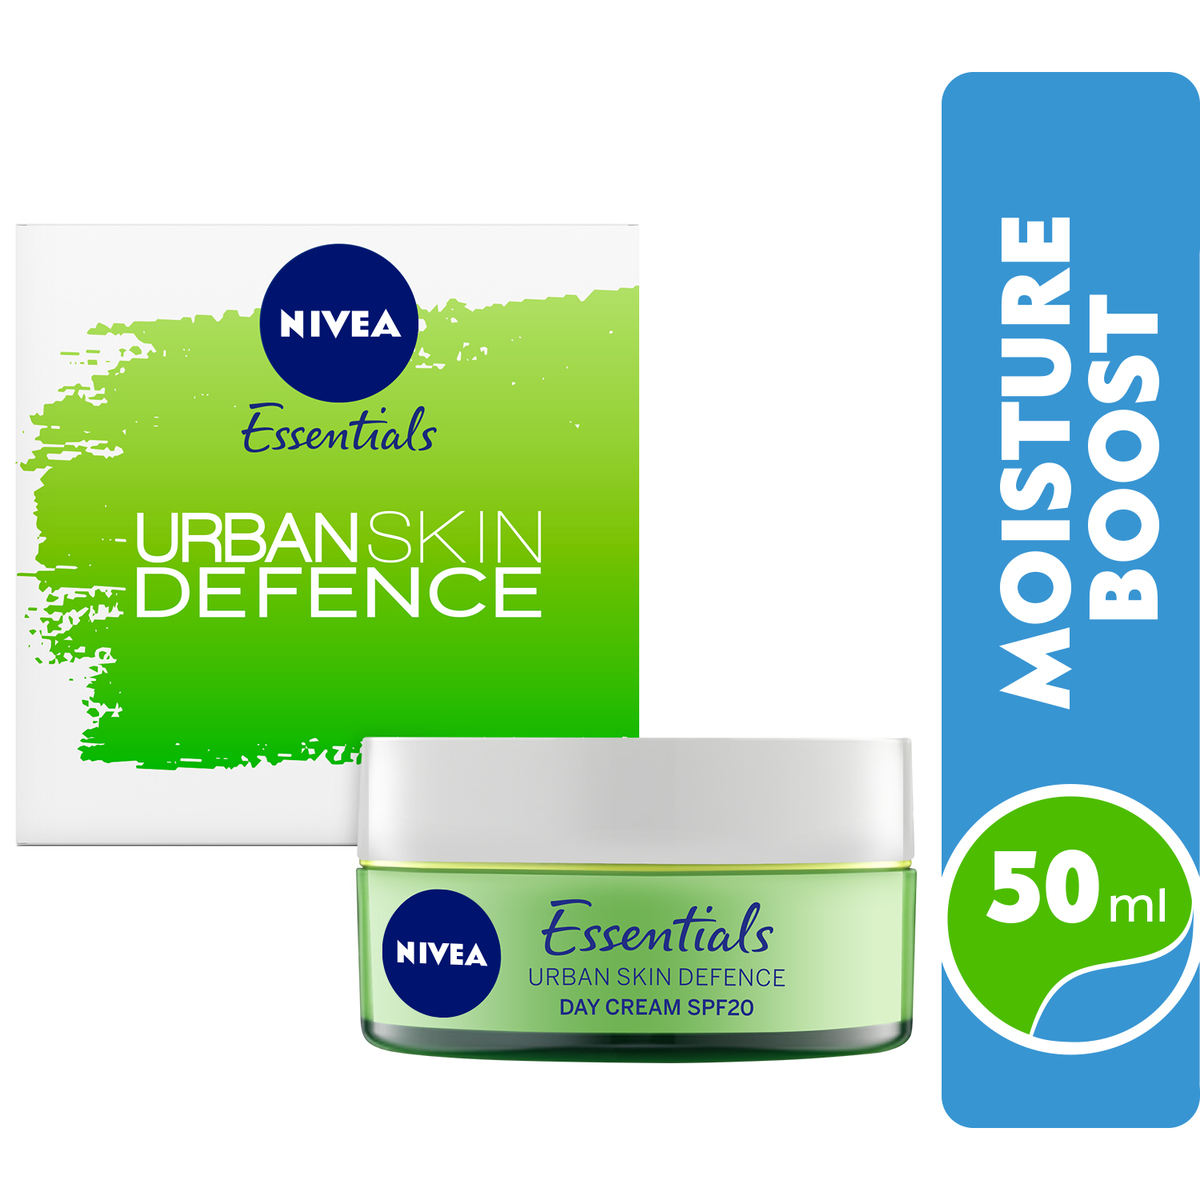 Nivea Essentials Urban Skin Defence Day Cream SPF 20 50 ml